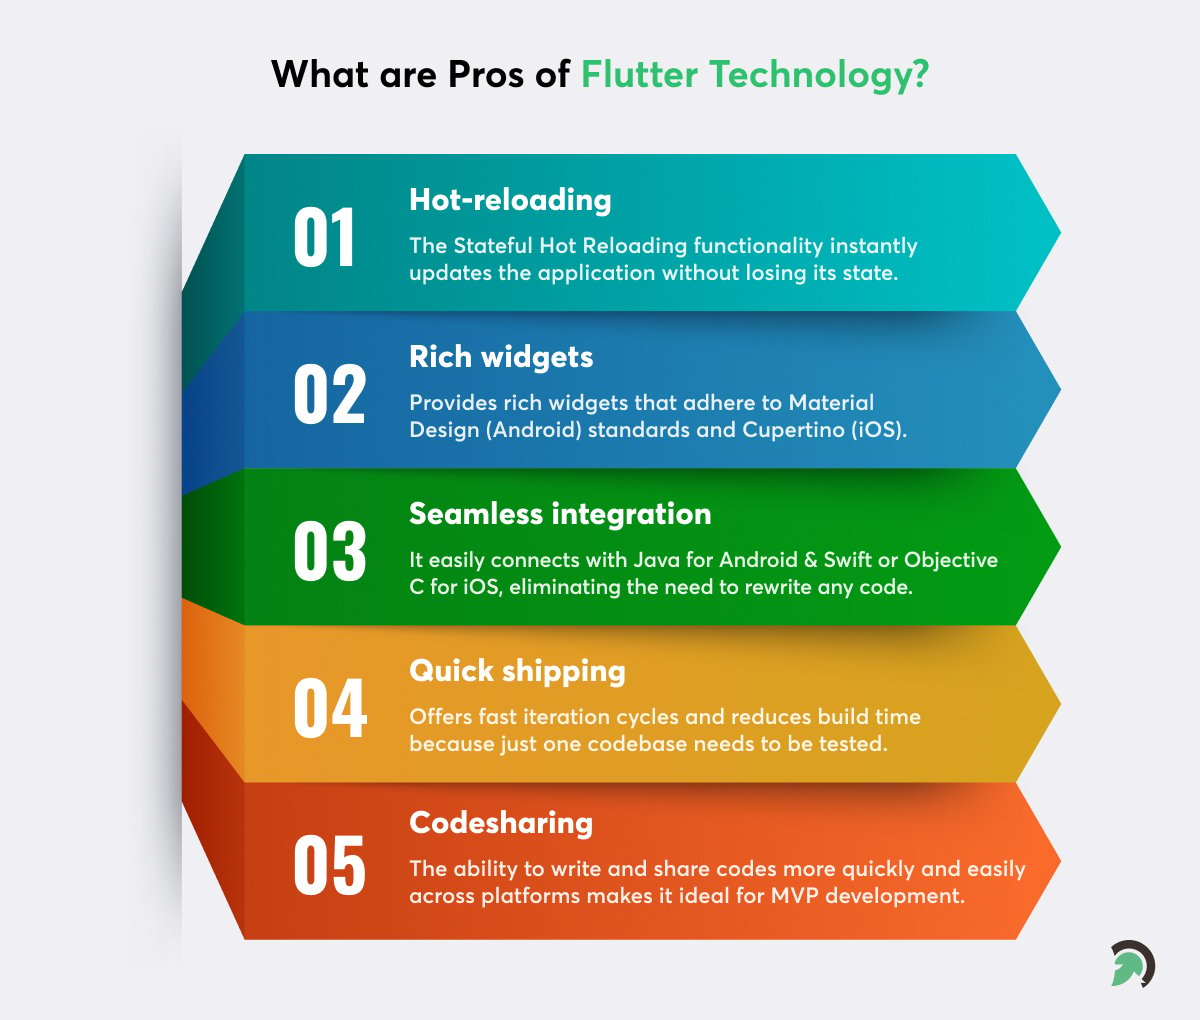 Pros of Flutter Technology